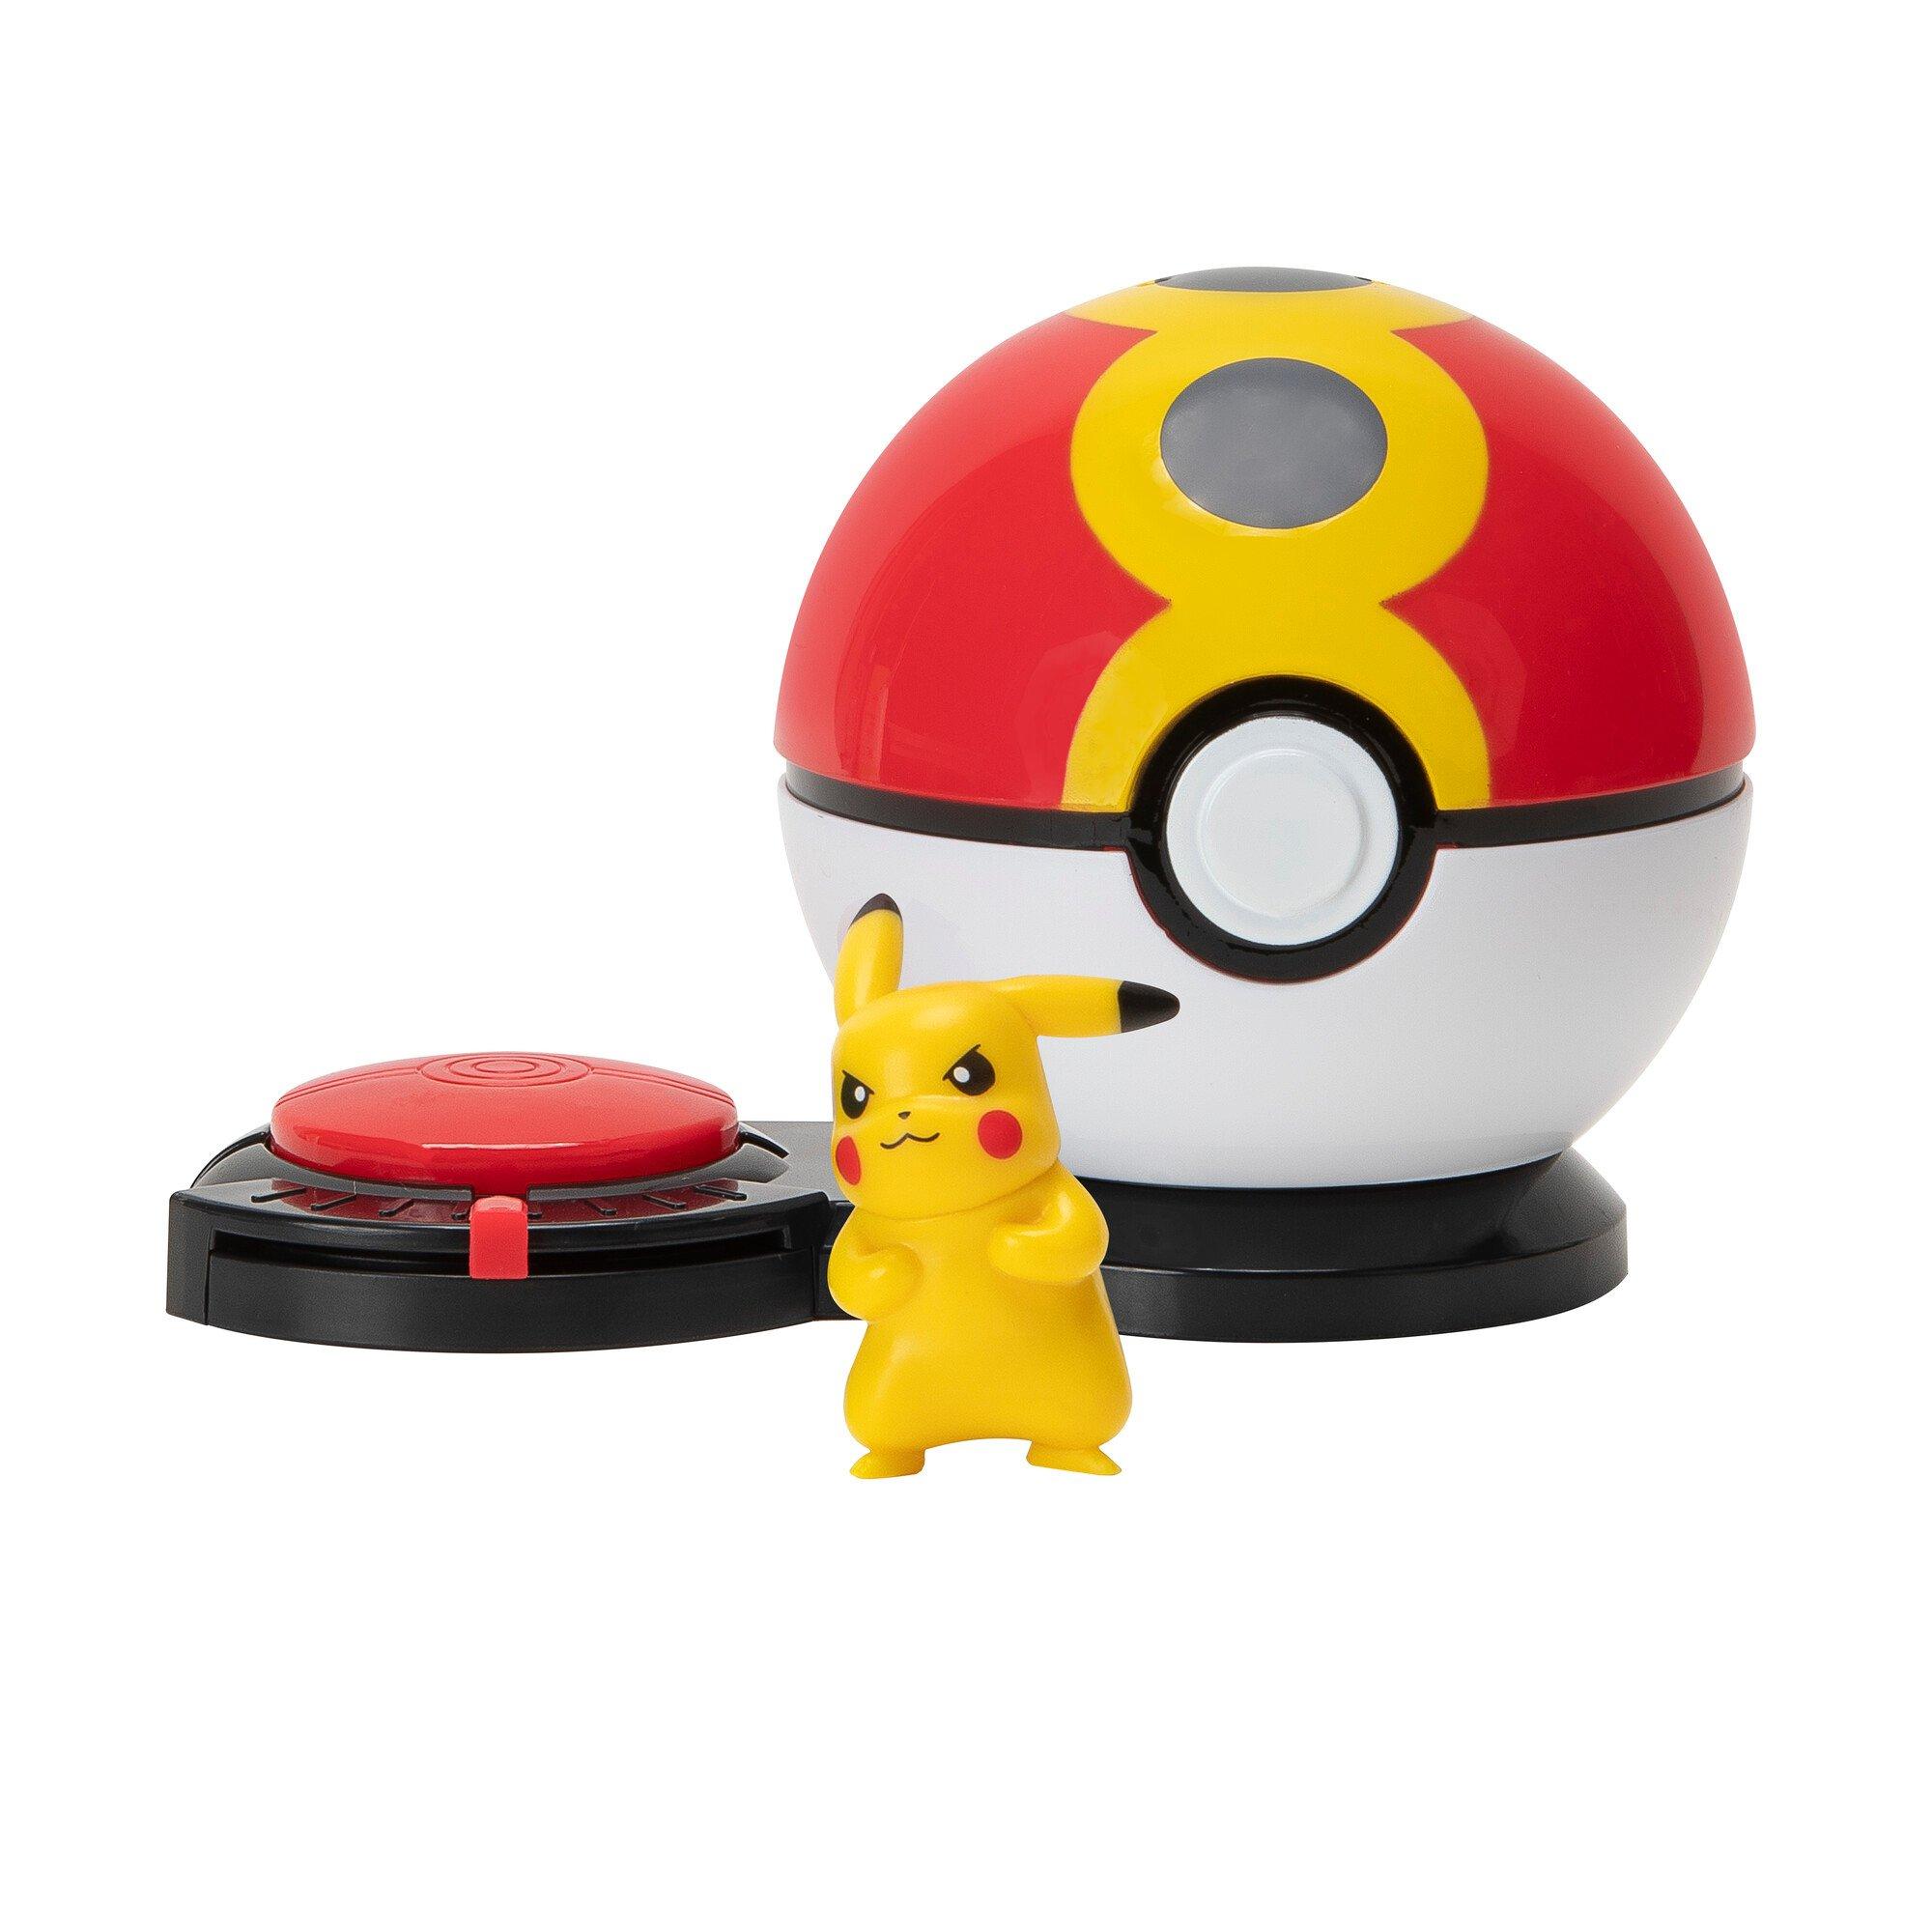 A pikachu pokeball model I bought a few years back. : r/pokemon